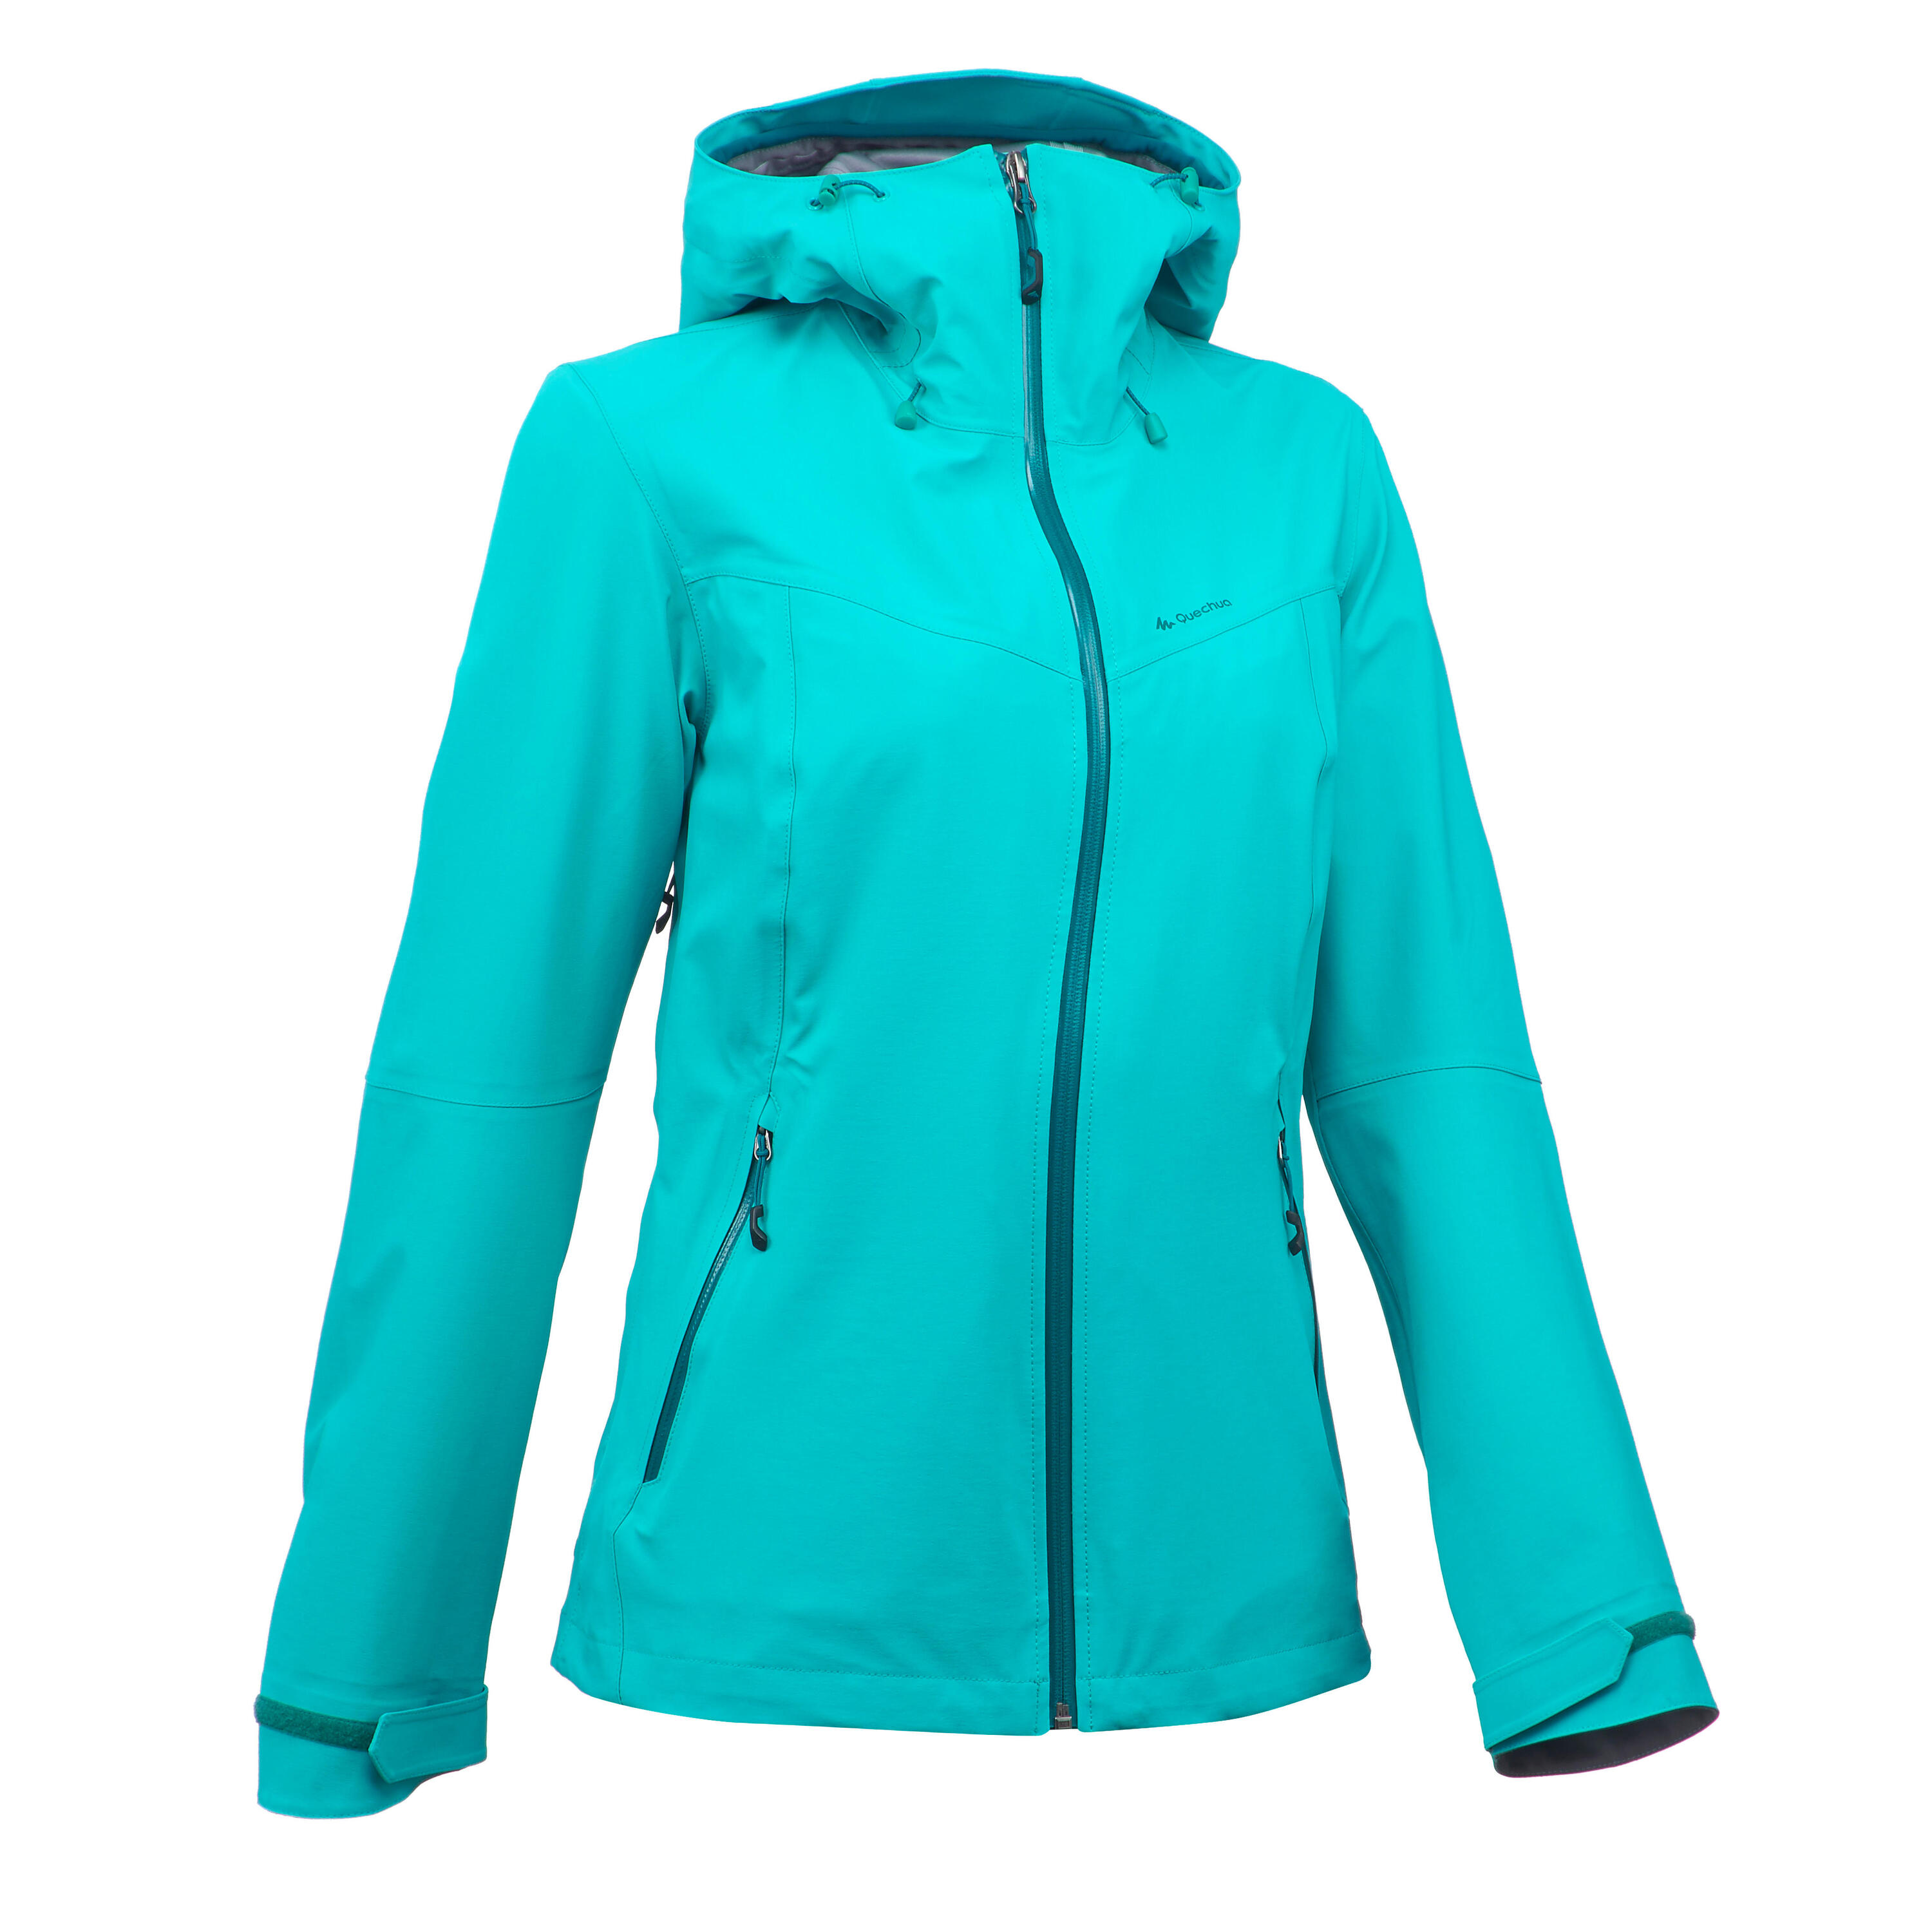 MH500 Women's Mountain Hiking Waterproof Jacket - Turquoise 1/17